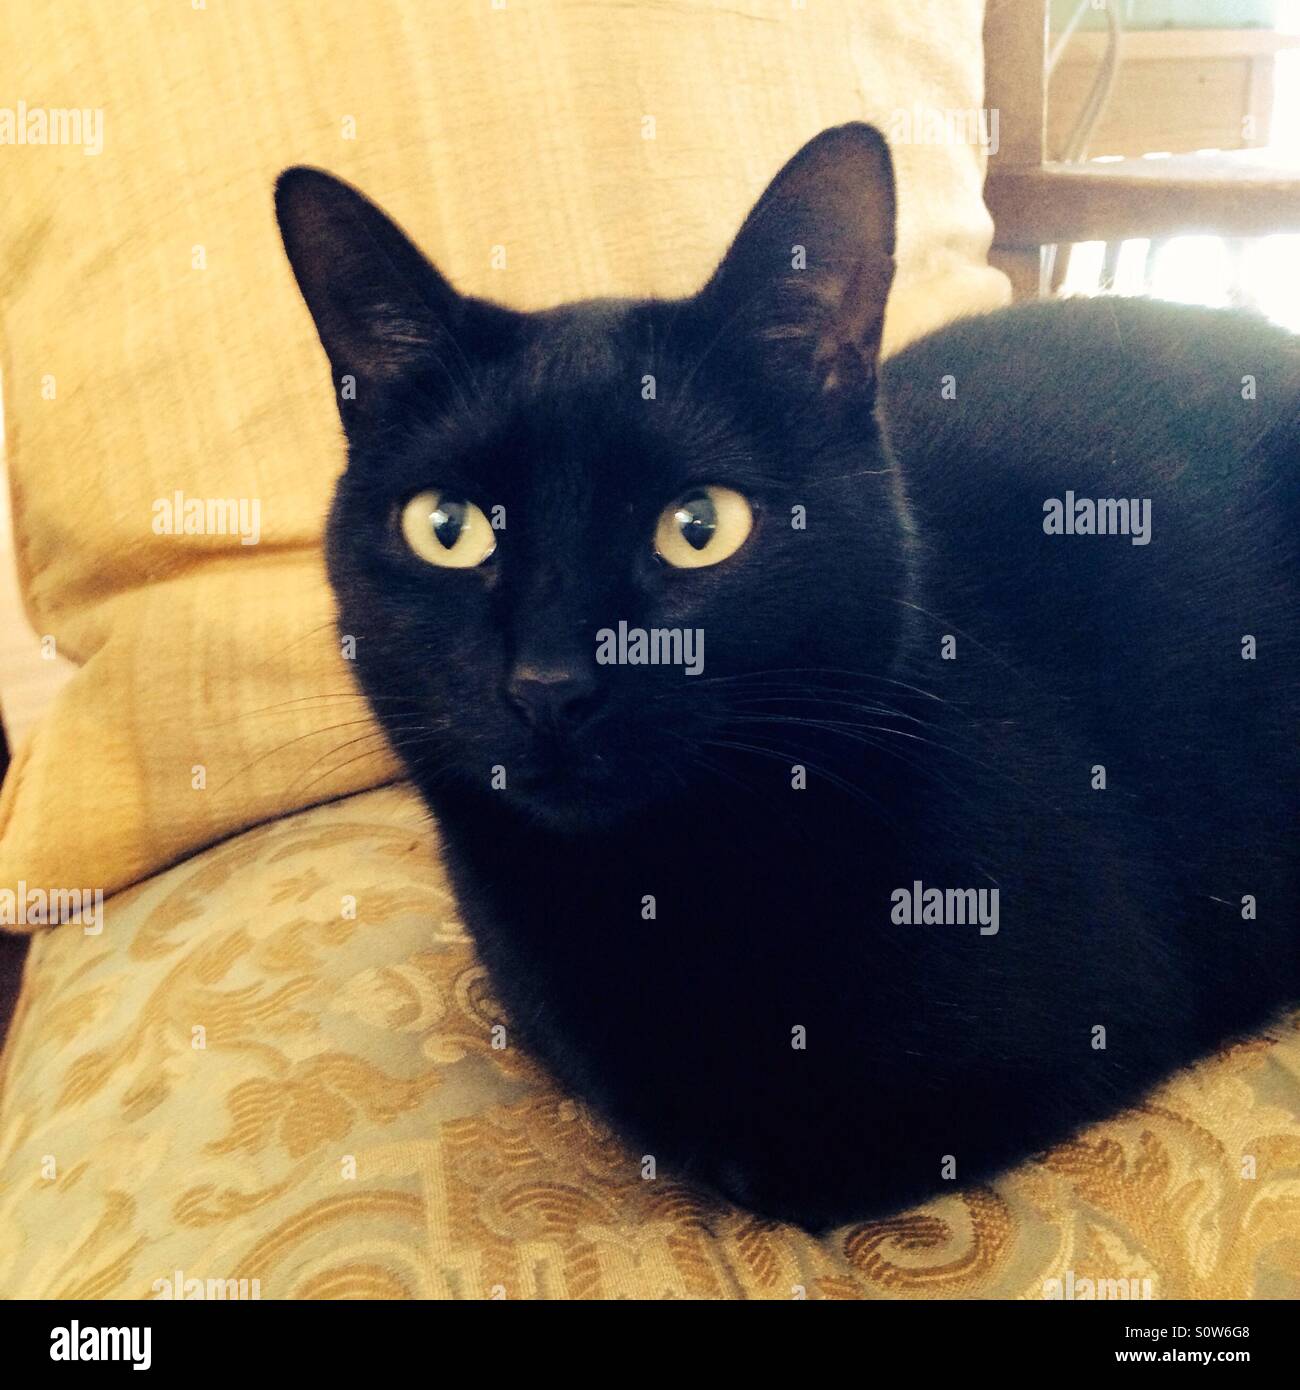 Black cat on gold pillow Stock Photo